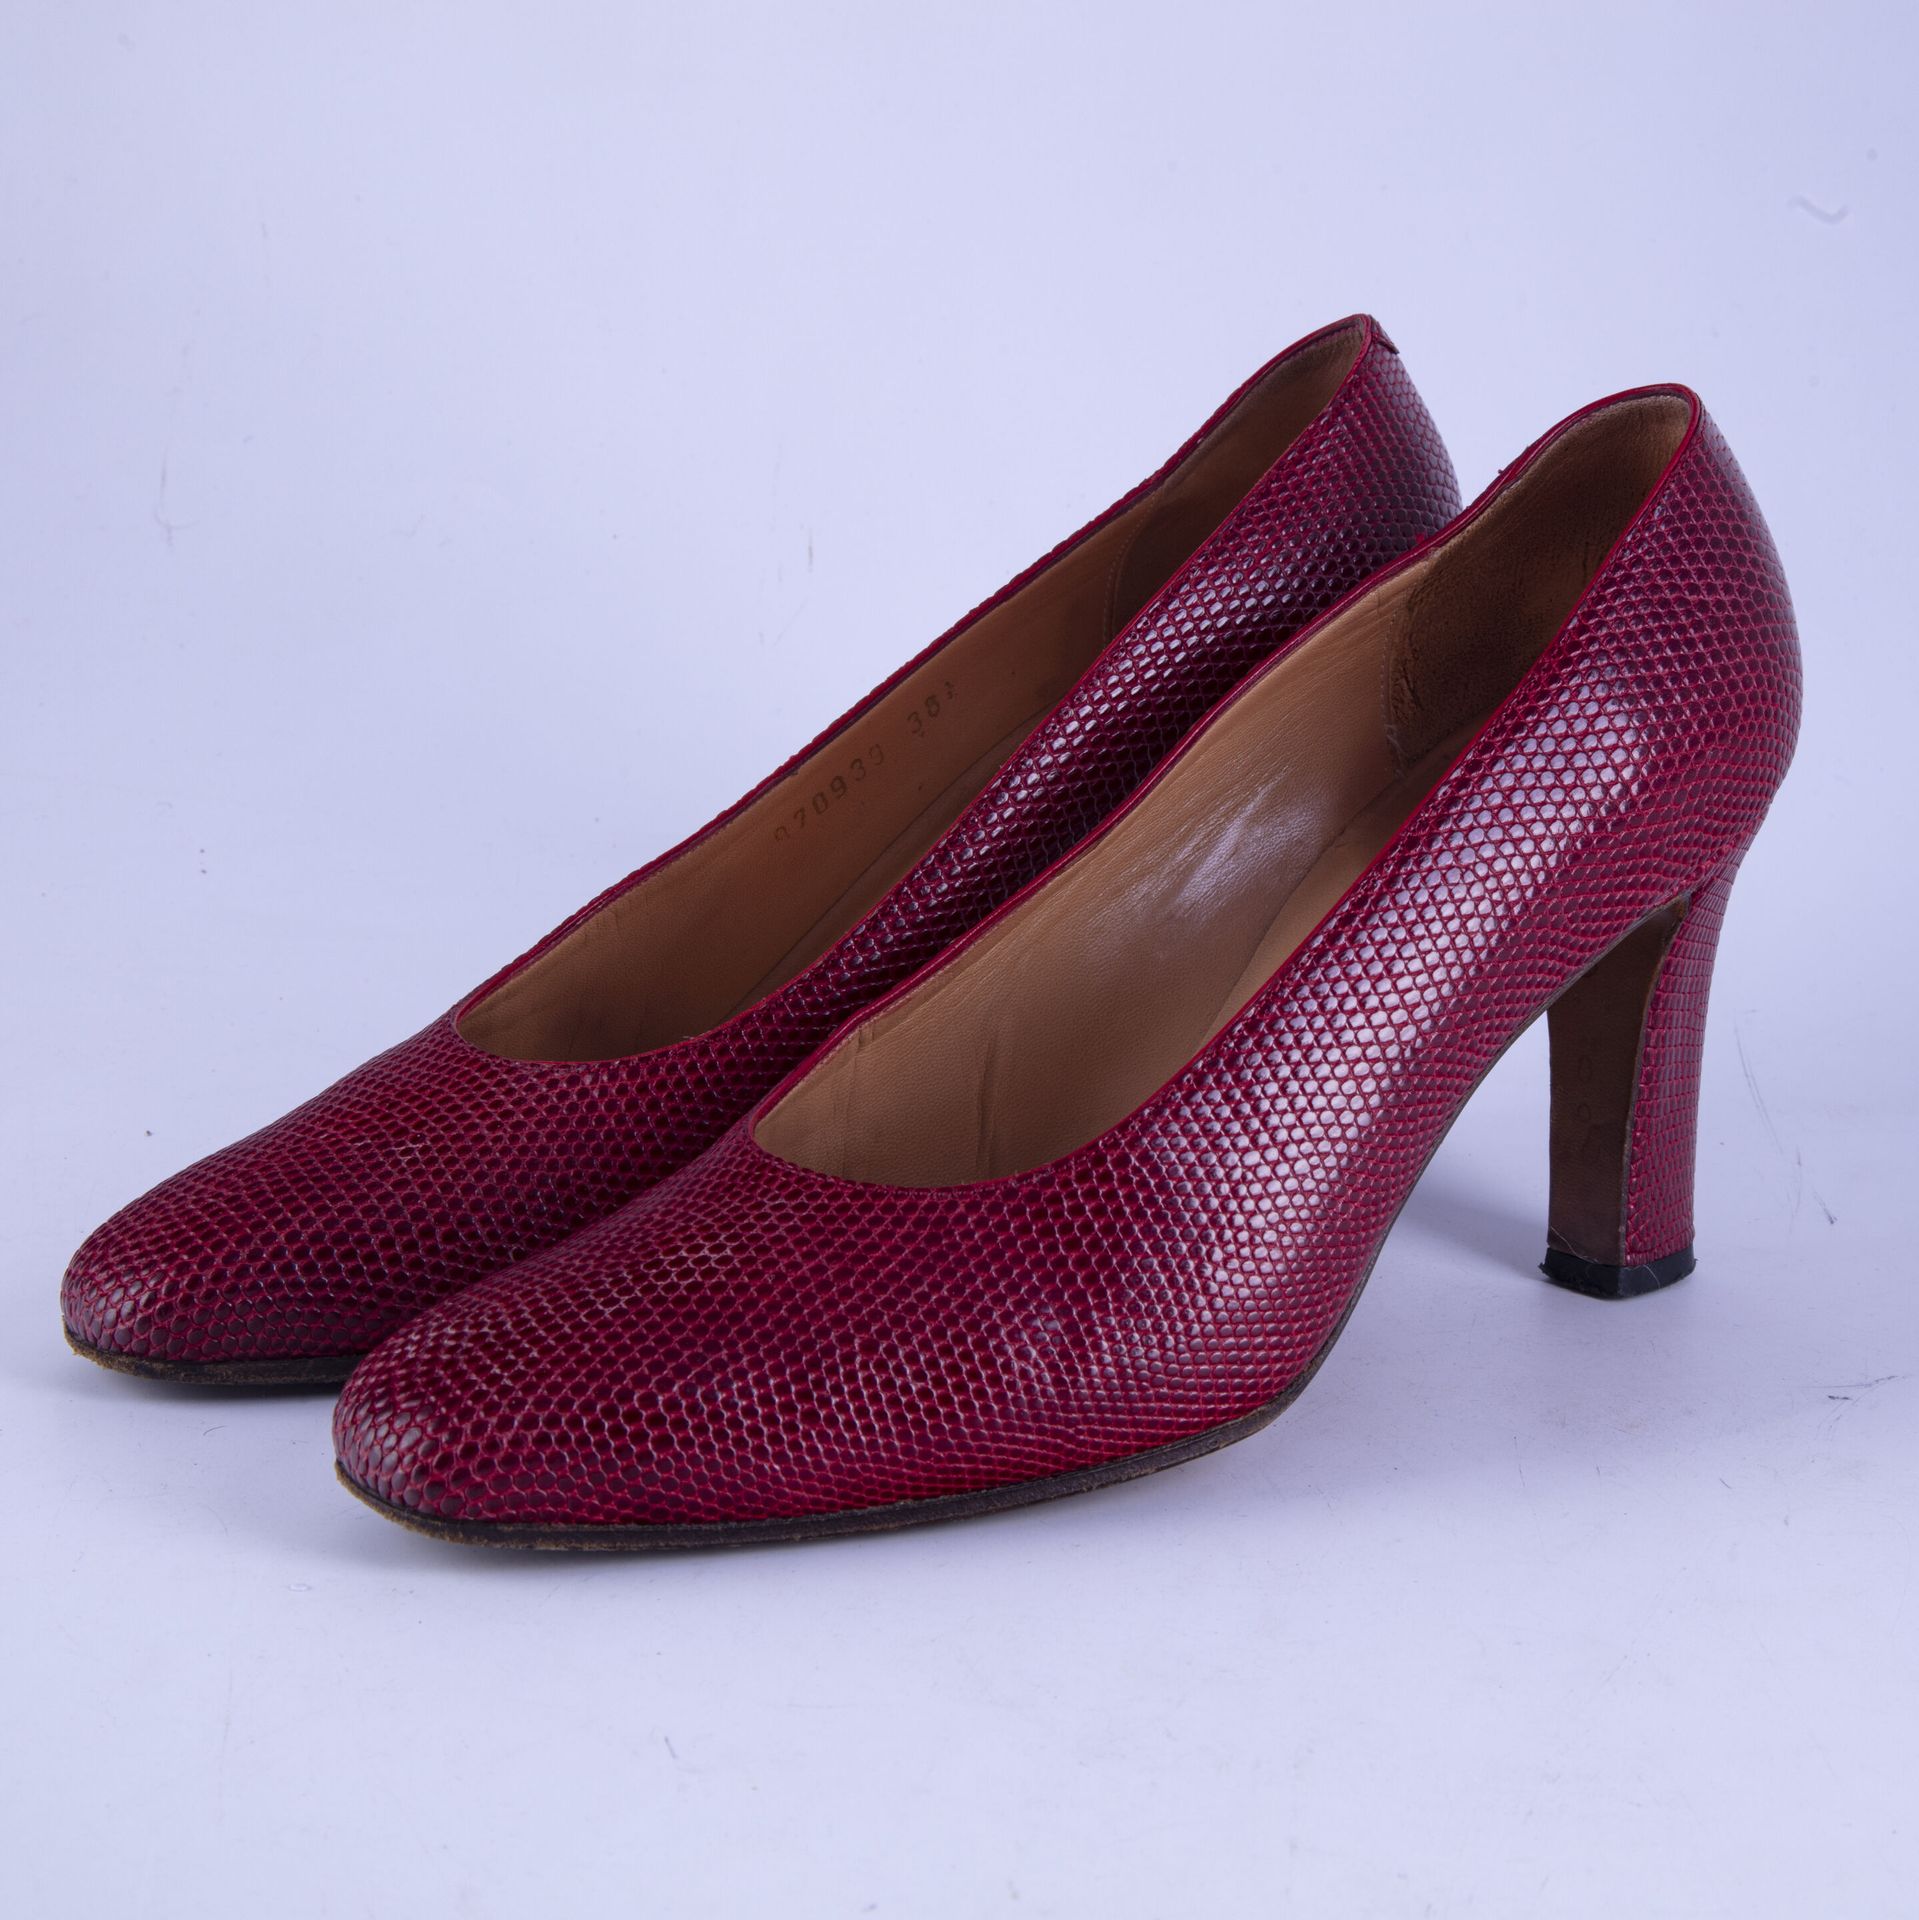 Null HAREL - 巴黎 
一双红色皮鞋。 
尺寸38 1/2
几乎没有磨损